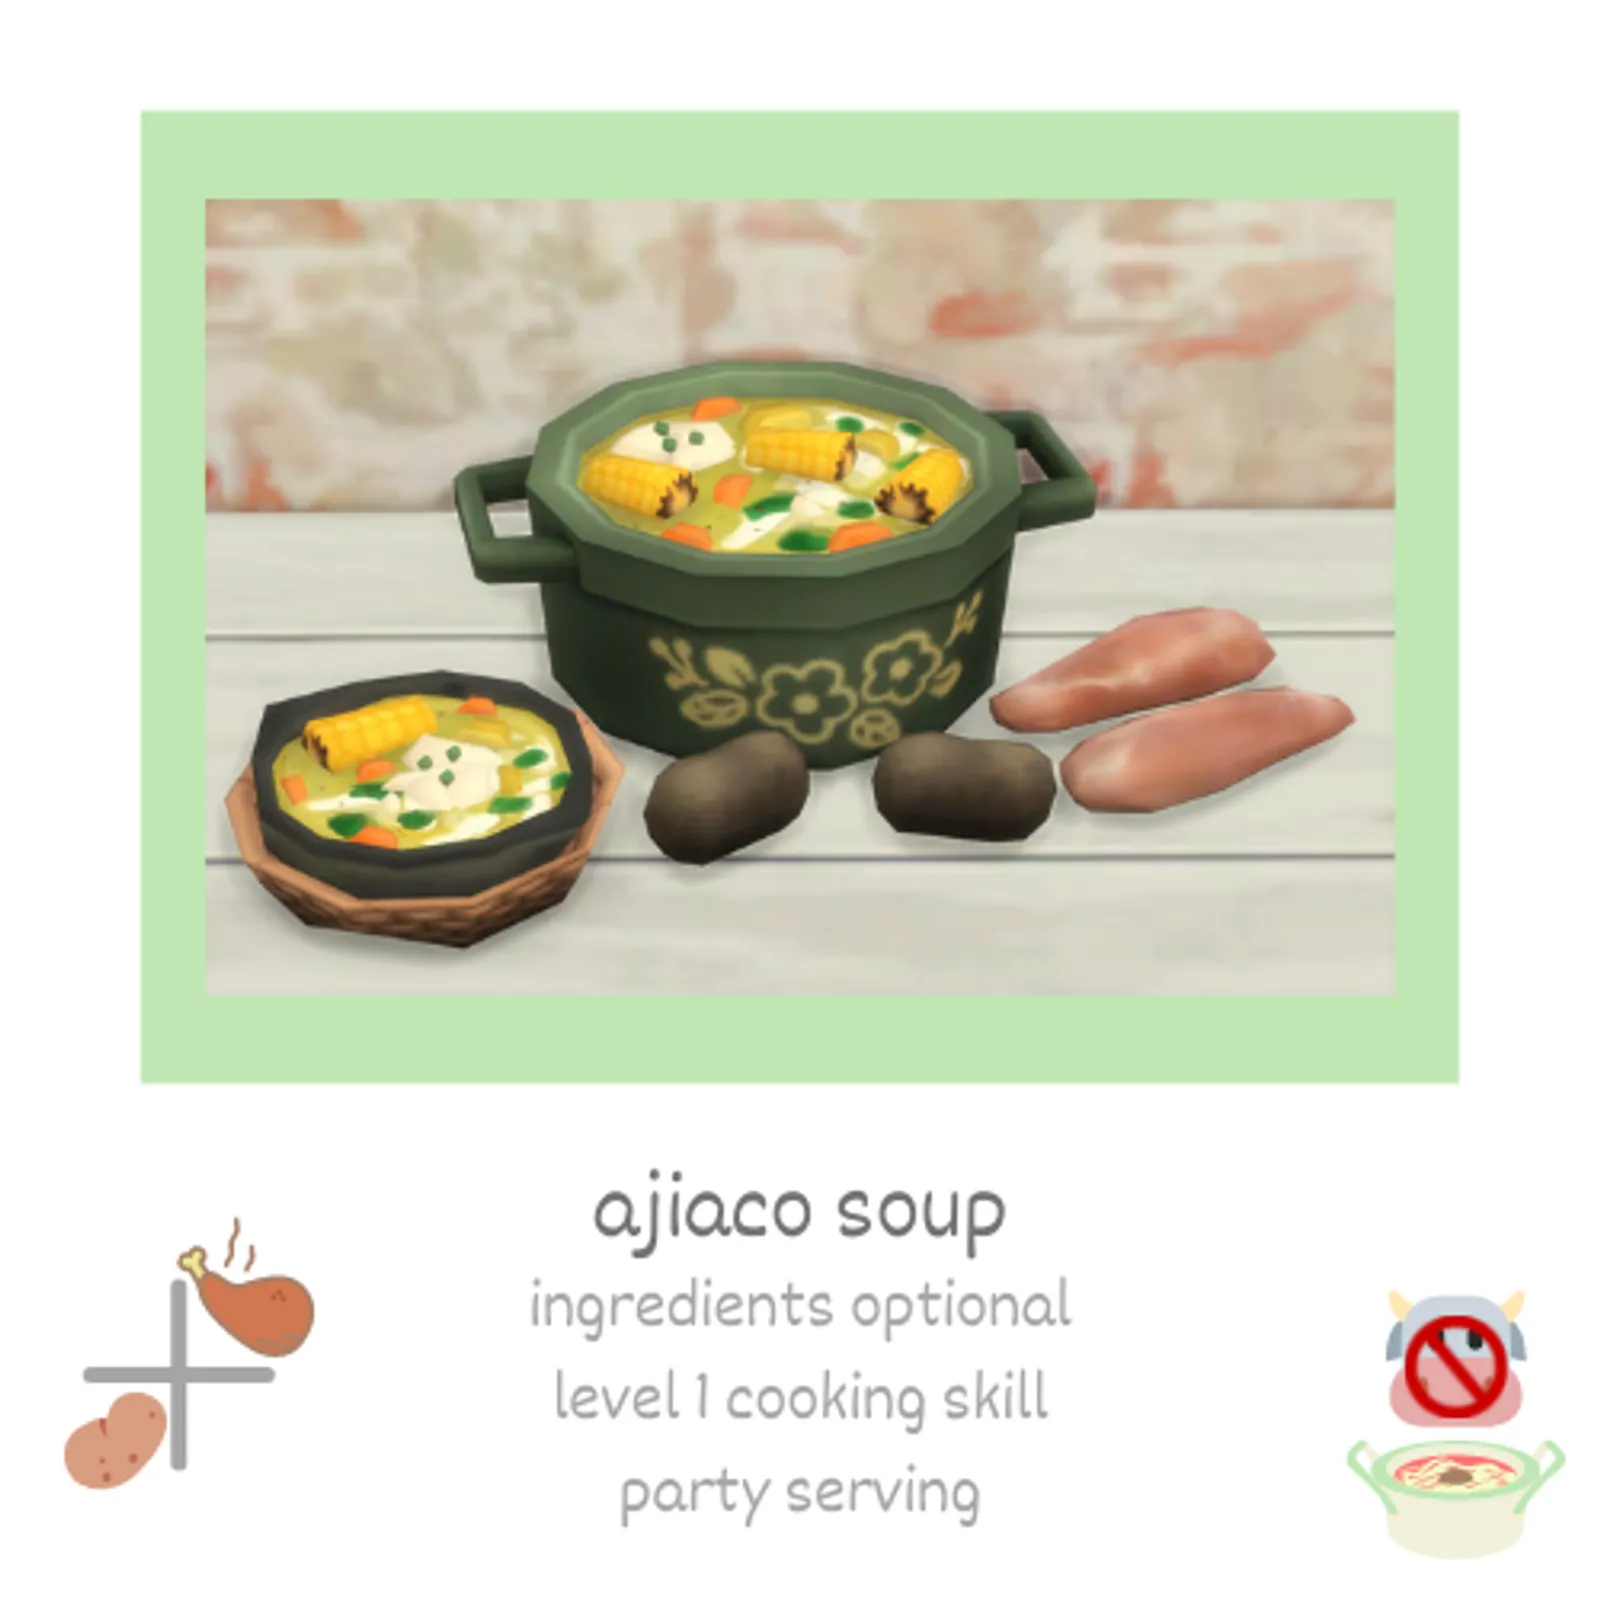 ajiaco soup